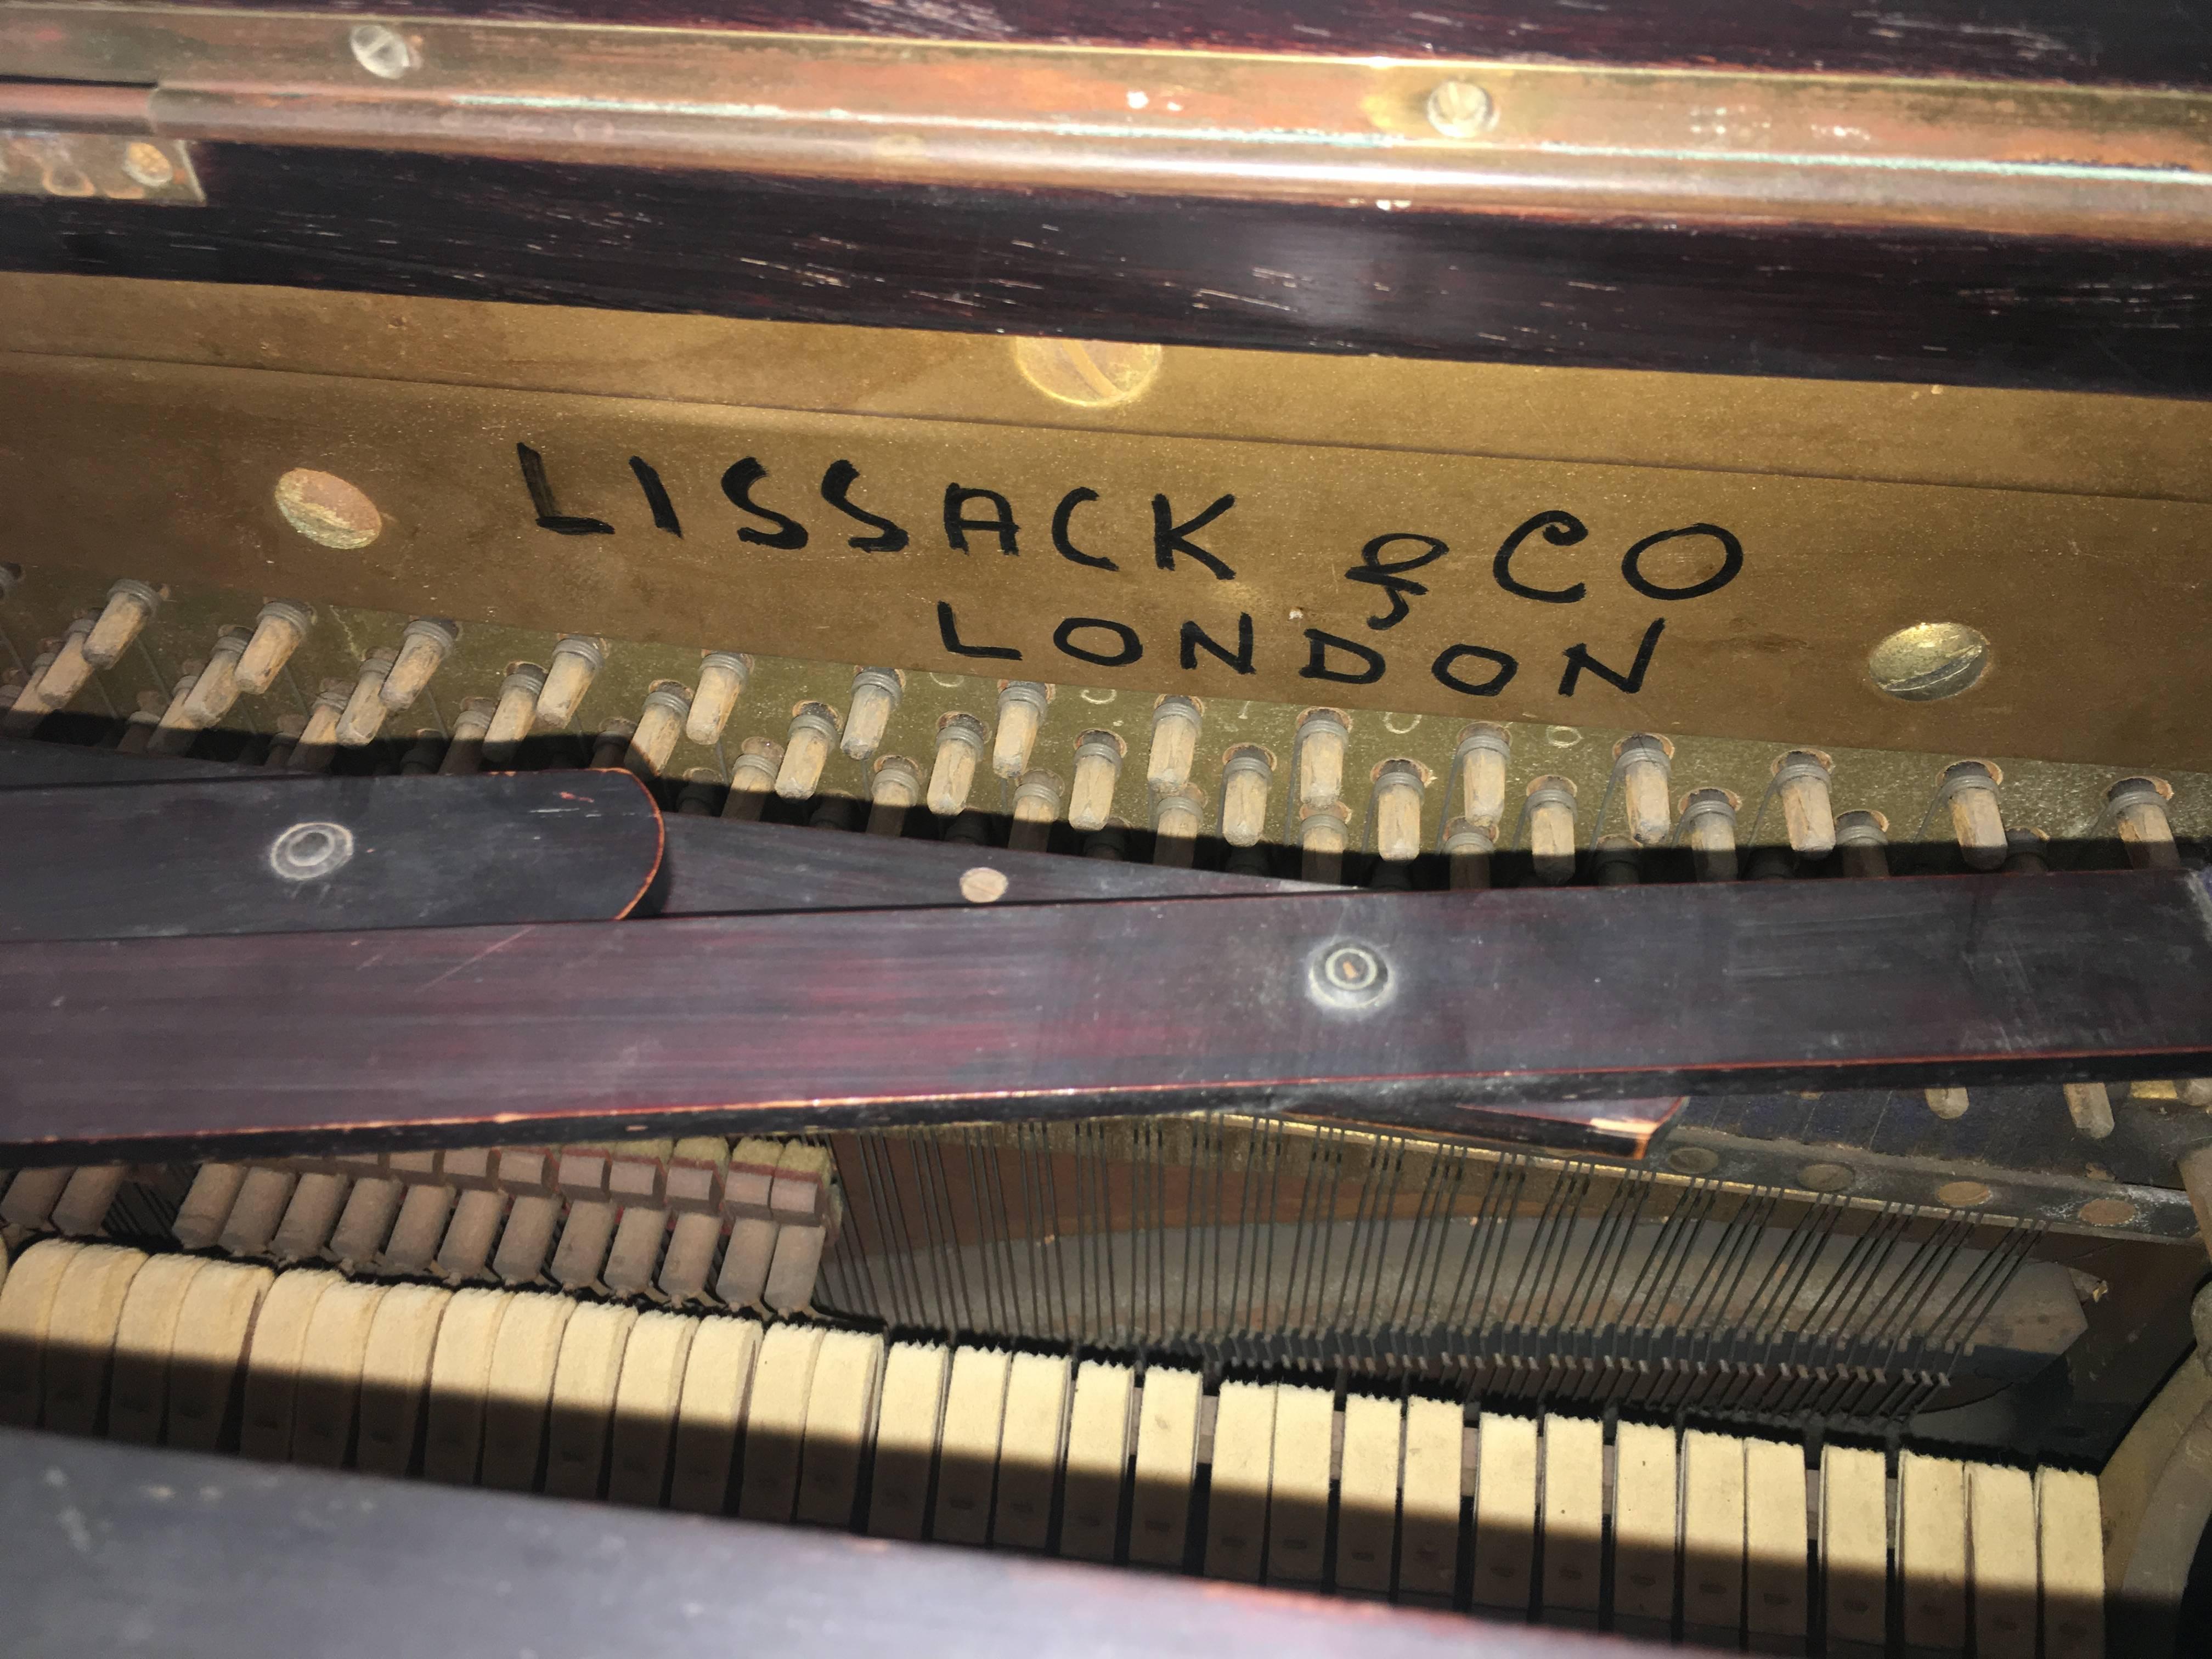 Mid-Century Modern 1896 Lissack & Co London Upright Iron Gand Diploma Awarded Piano